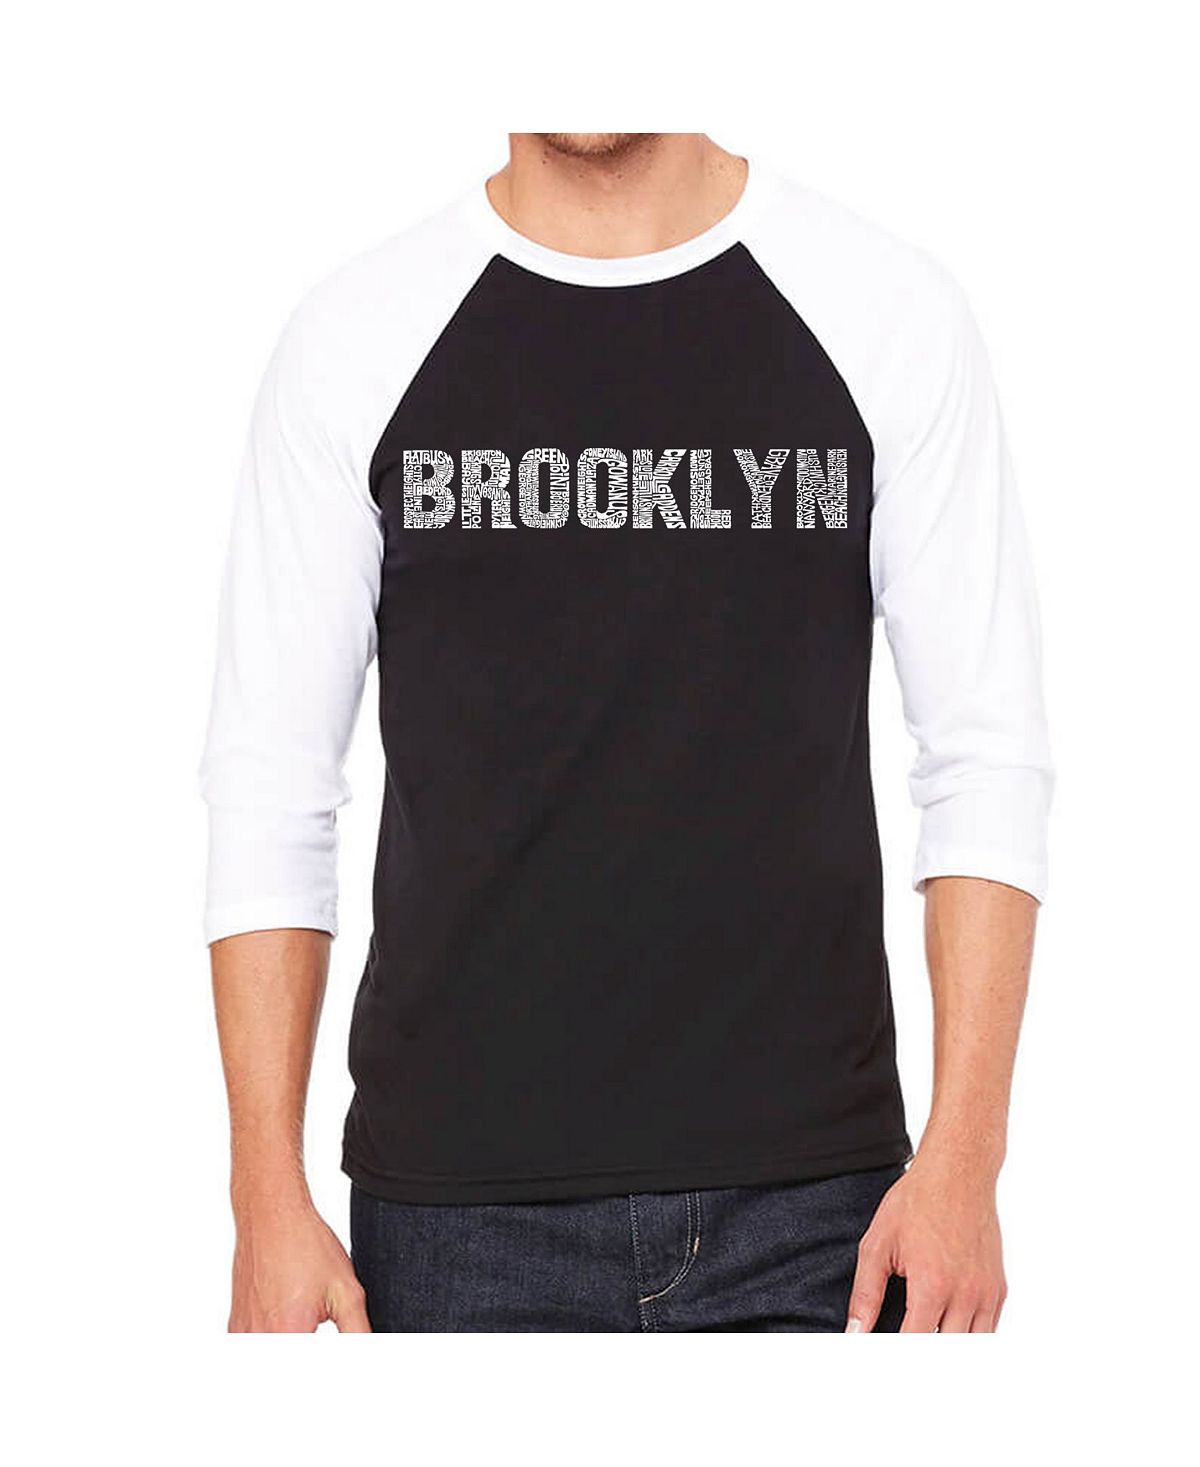 Мужская футболка реглан с надписью brooklyn neighborhoods LA Pop Art, черный мужская футболка реглан с надписью bronx neighborhoods la pop art серый